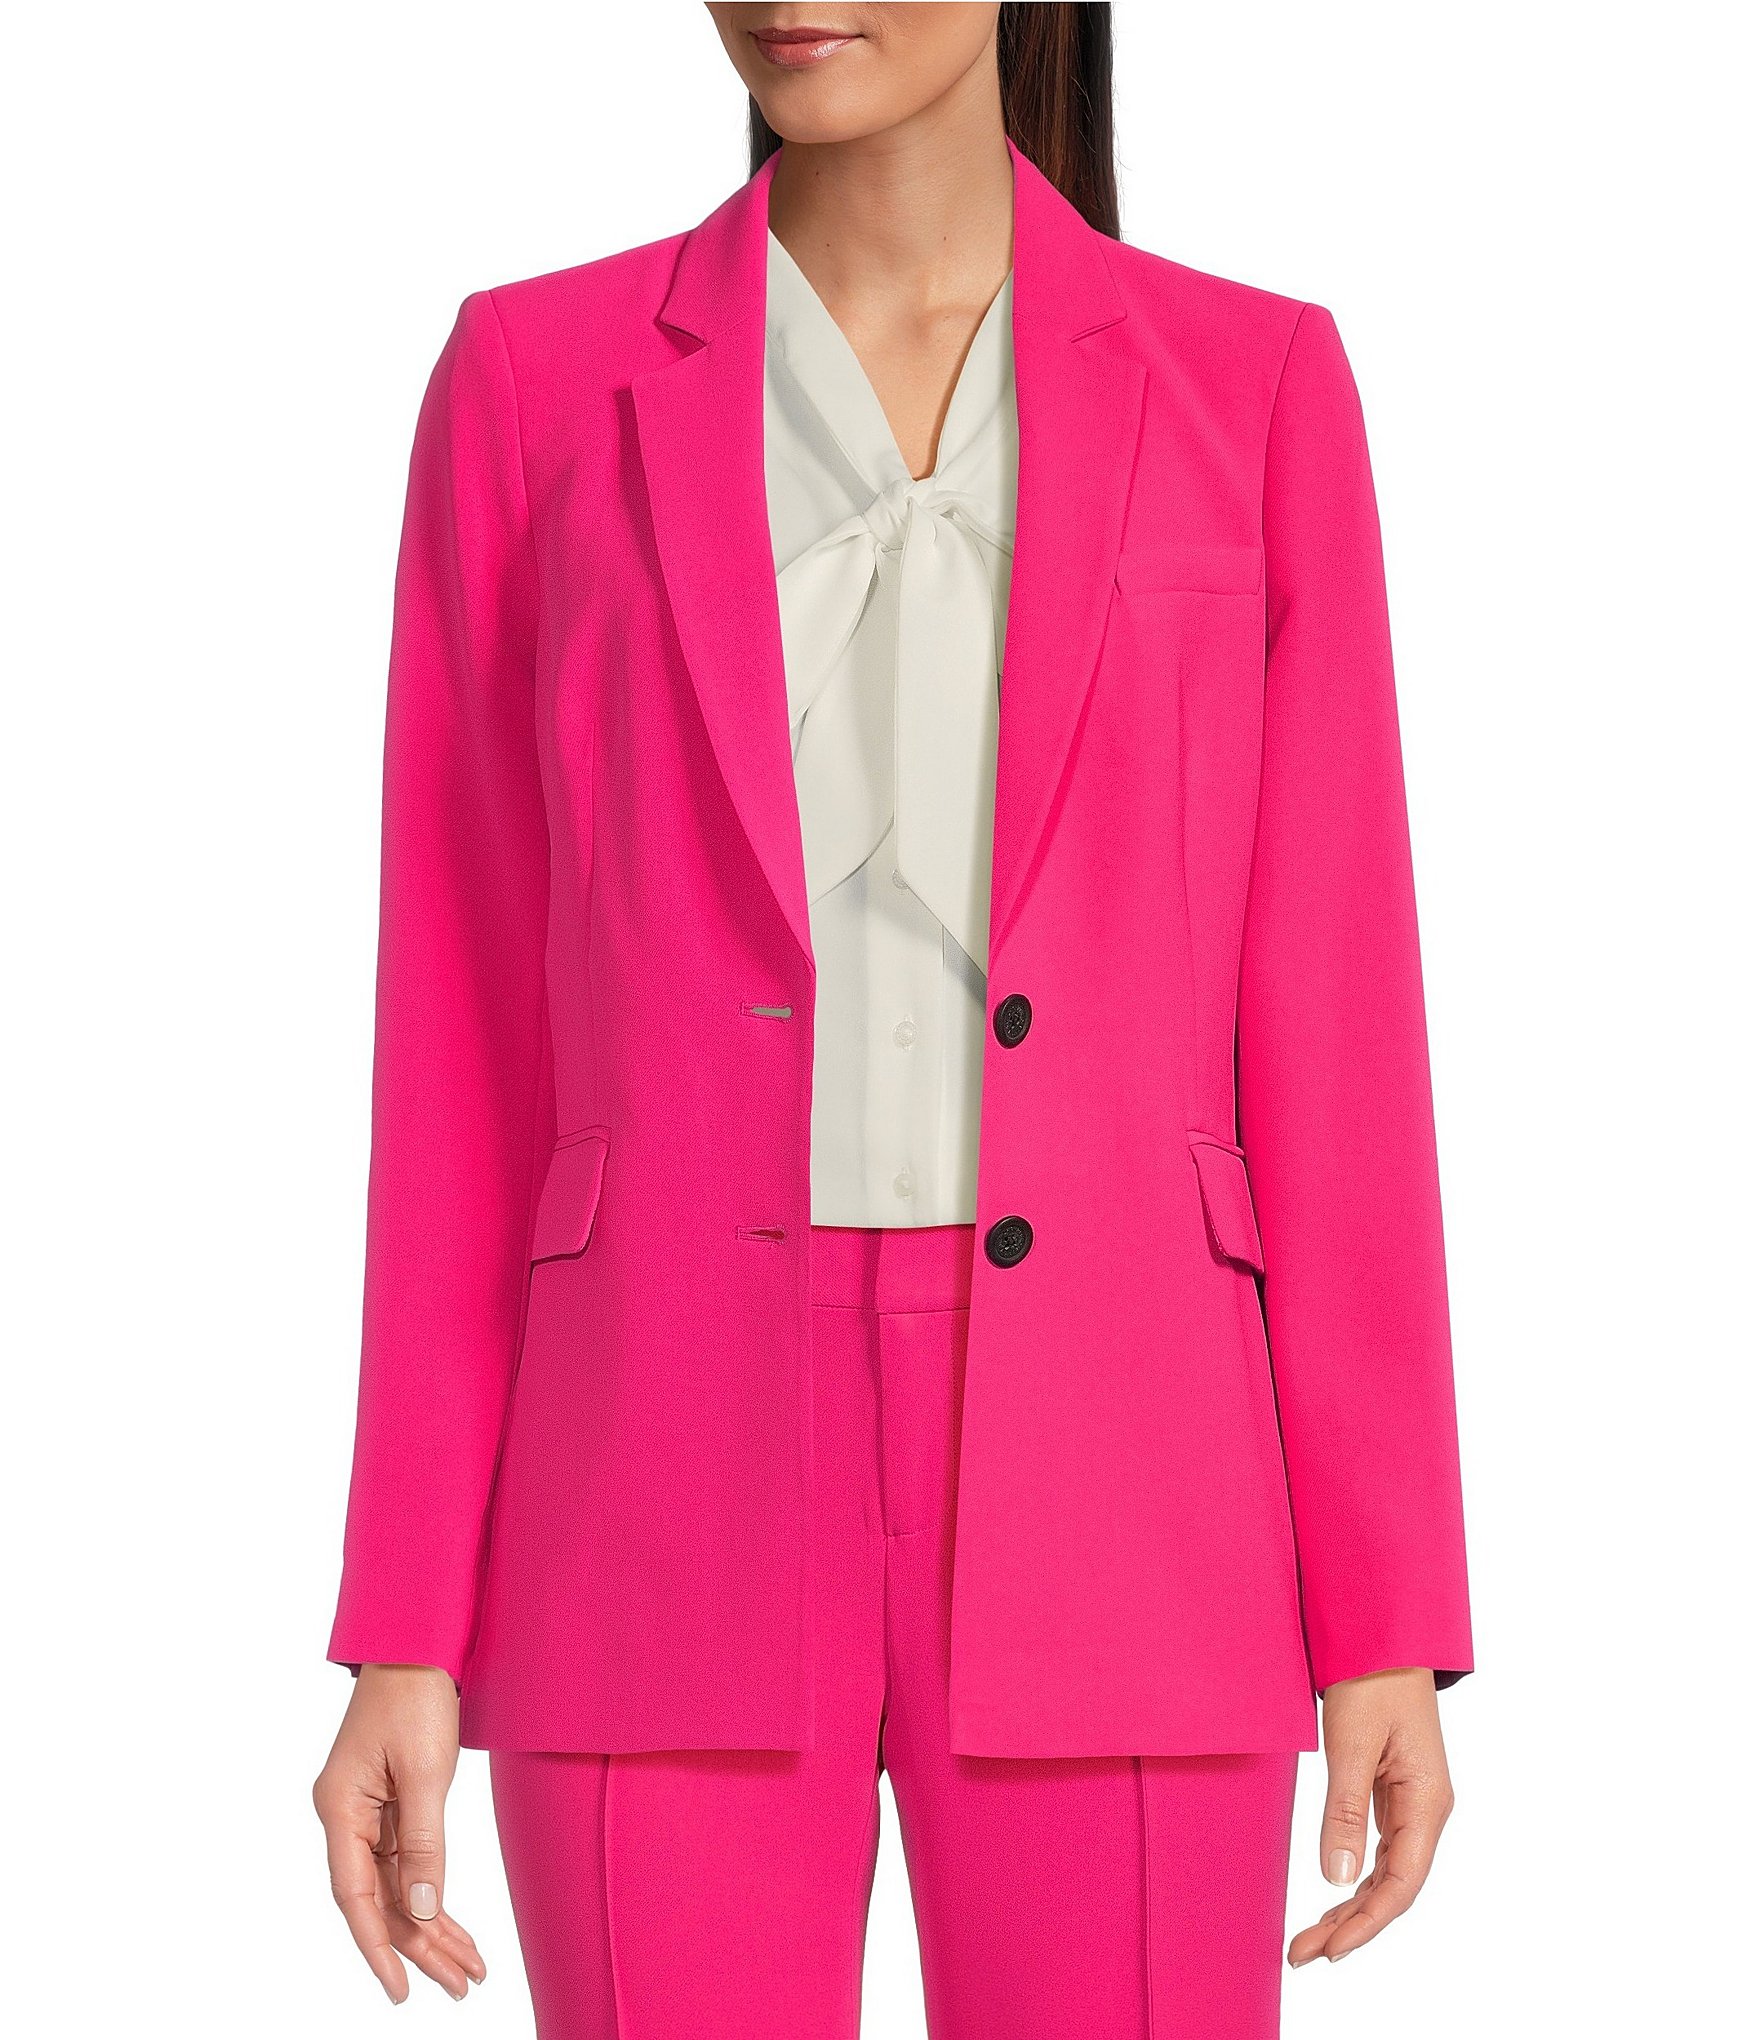 coat miss: Women's Work Jackets & Blazers